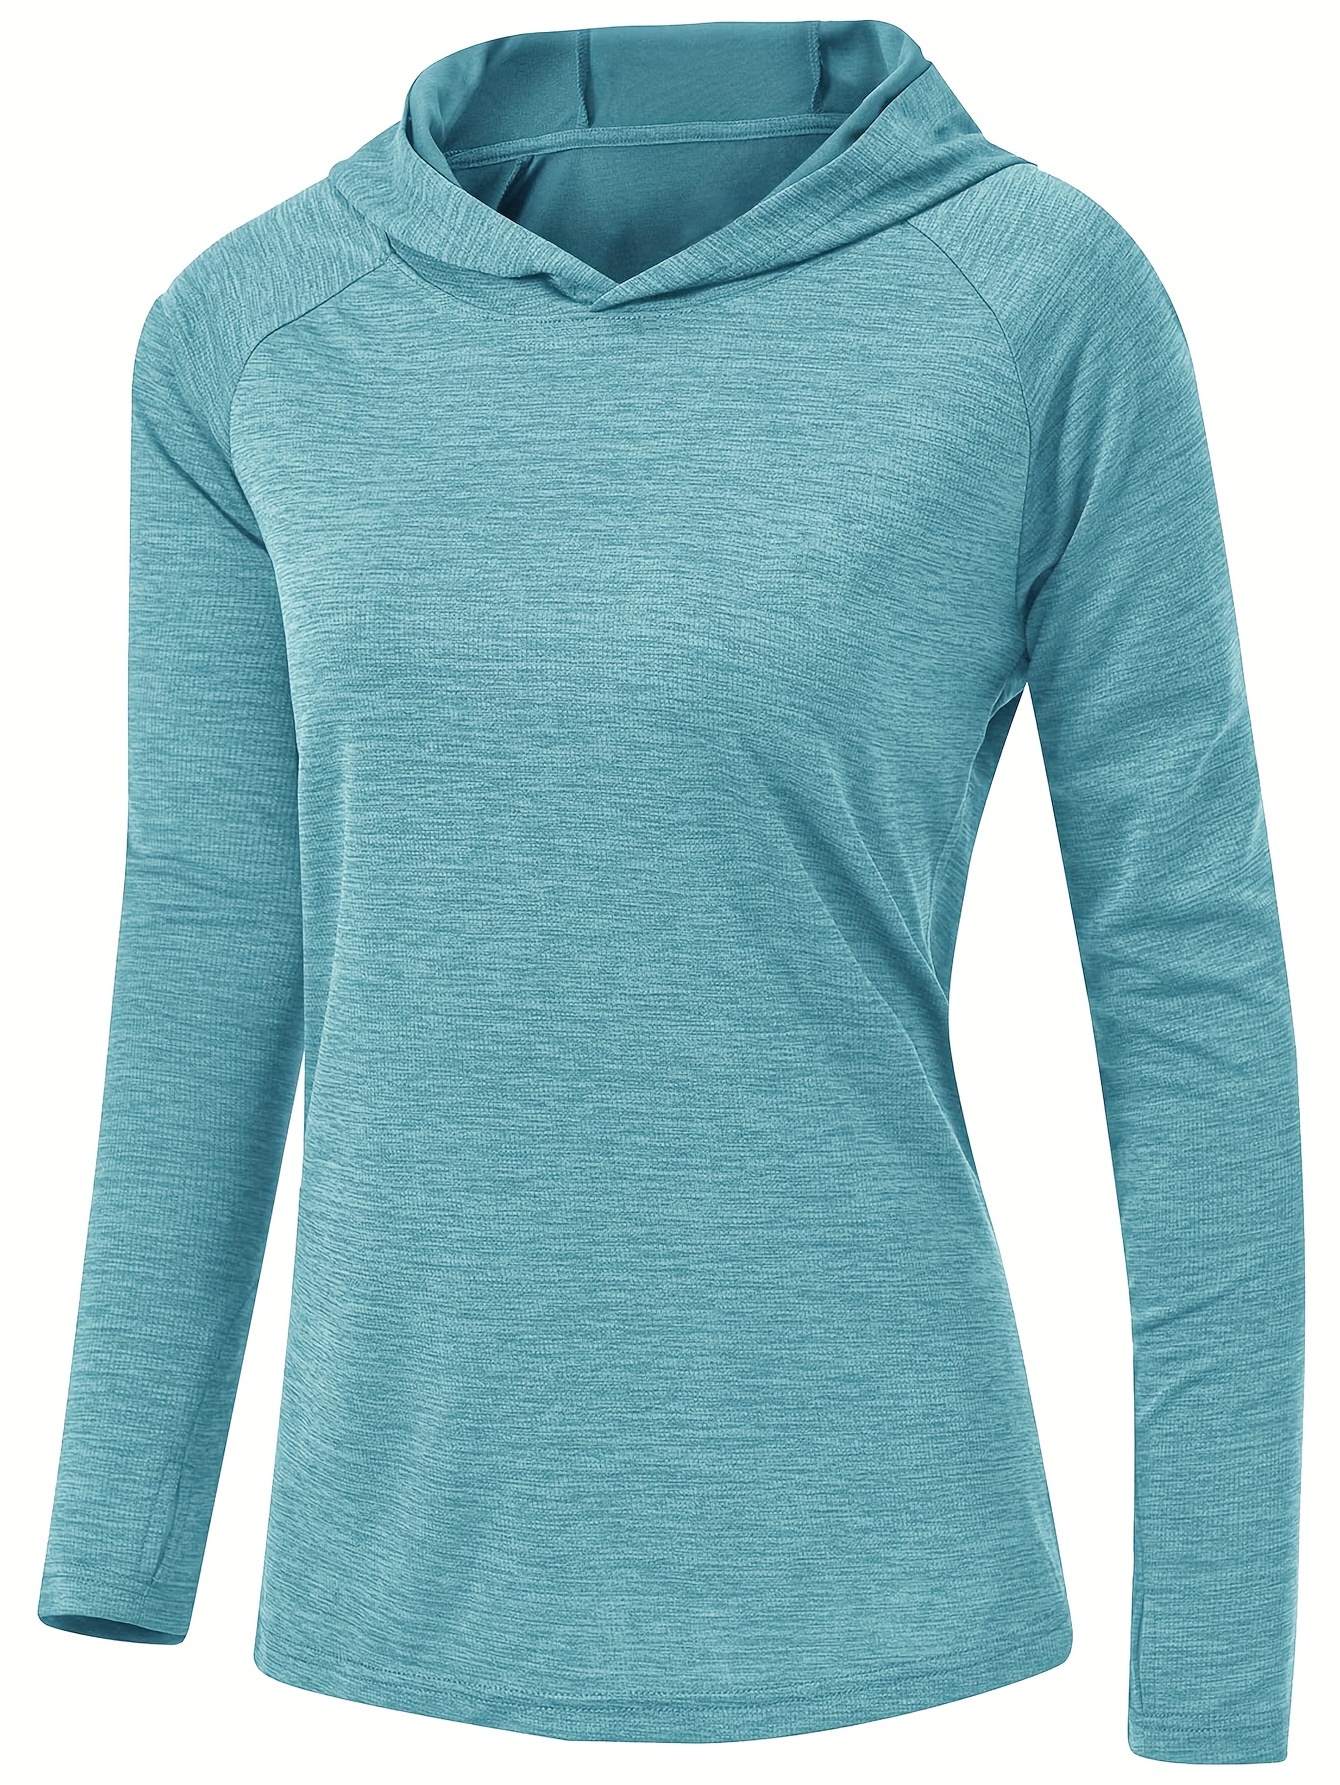 Womens Upf 50+ Sun Protection Hoodie Shirt, Long Sleeve Lightweight Fishing Hiking Outdoor UV Shirt, Women's Tops